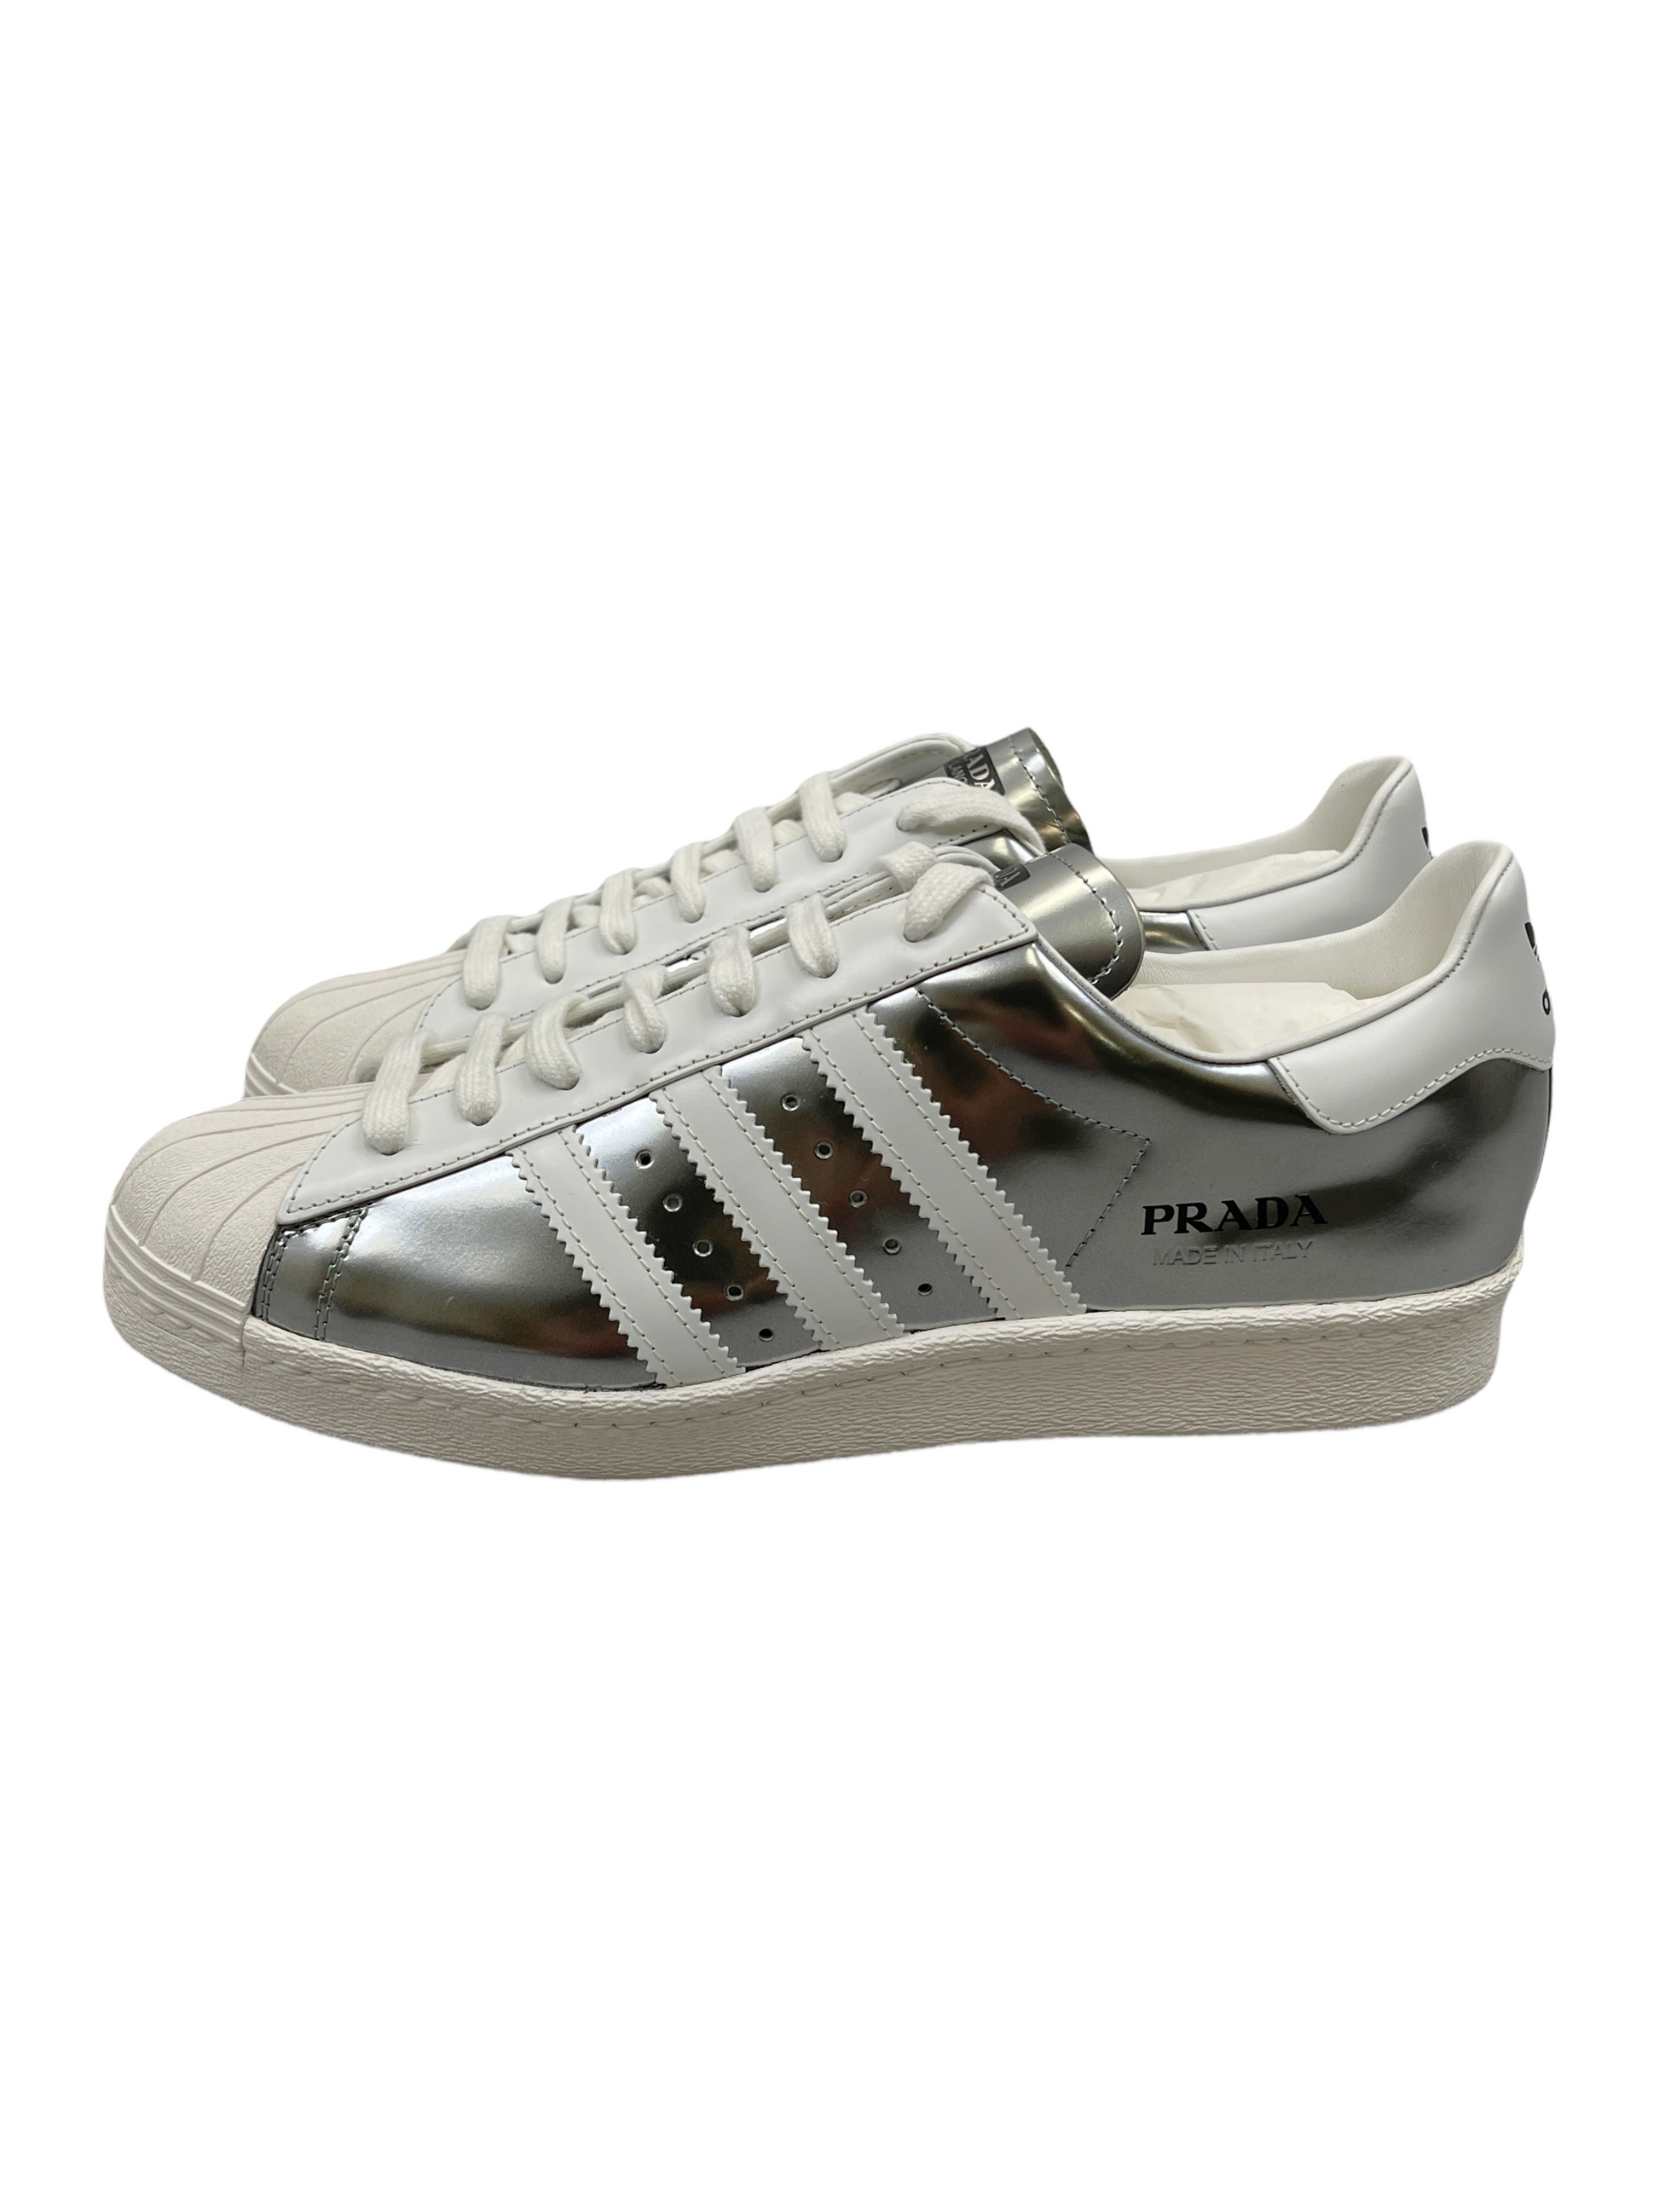 Adidas x Prada Superstar Silver Sneakers